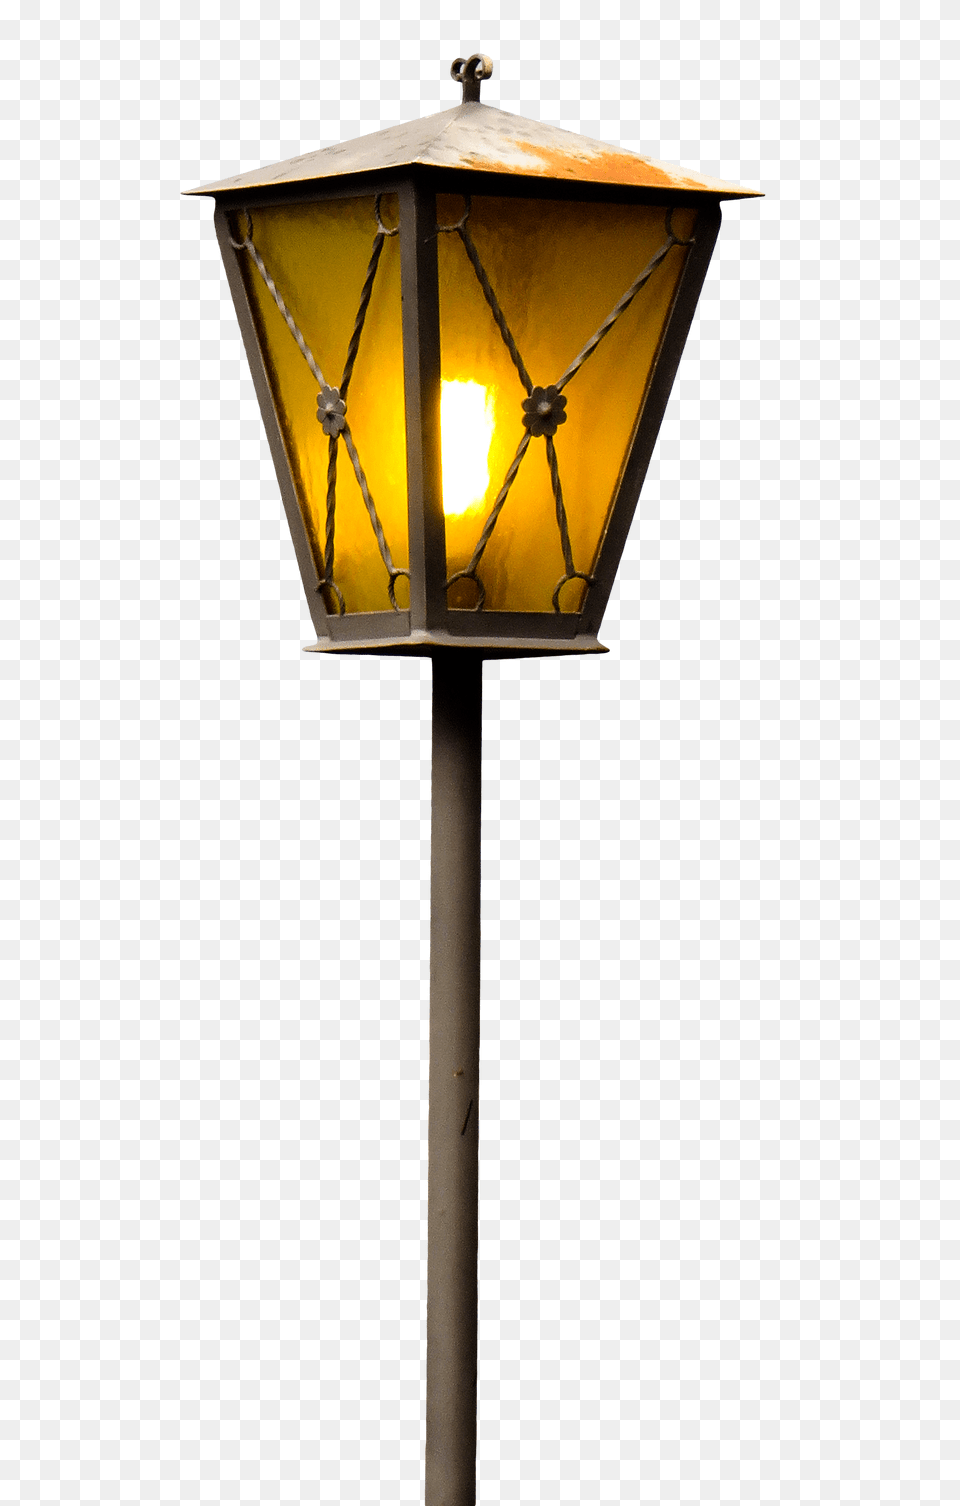 Old Street Lamp, Lampshade, Mailbox, Lamp Post Png Image